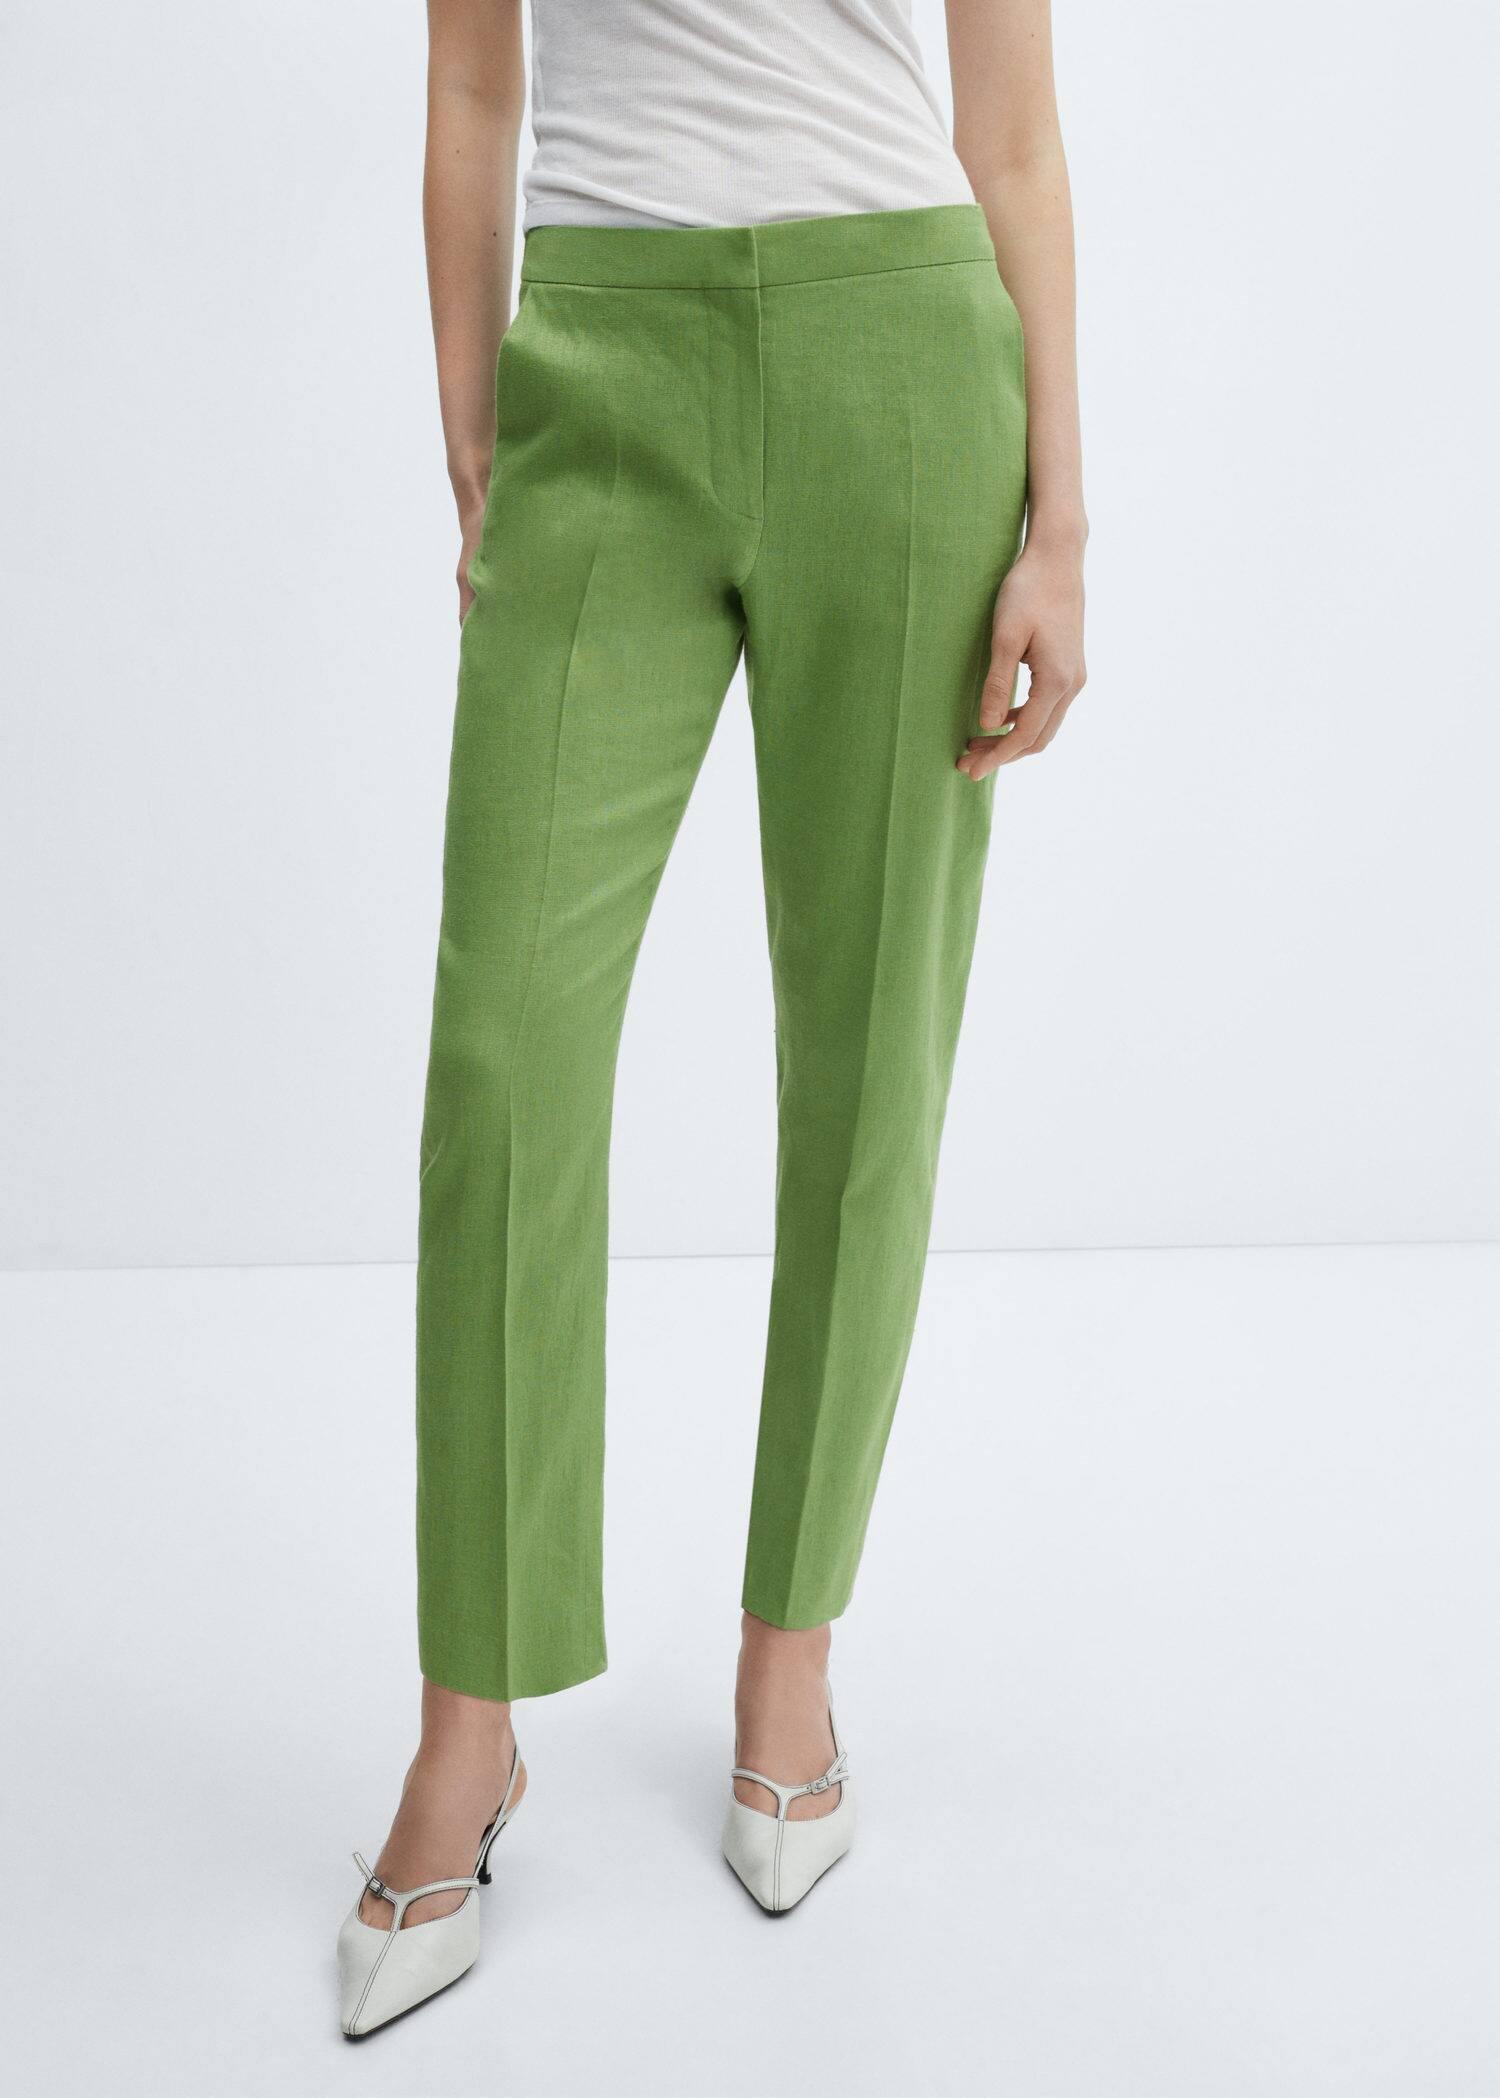 Mango - Green Linen Trousers